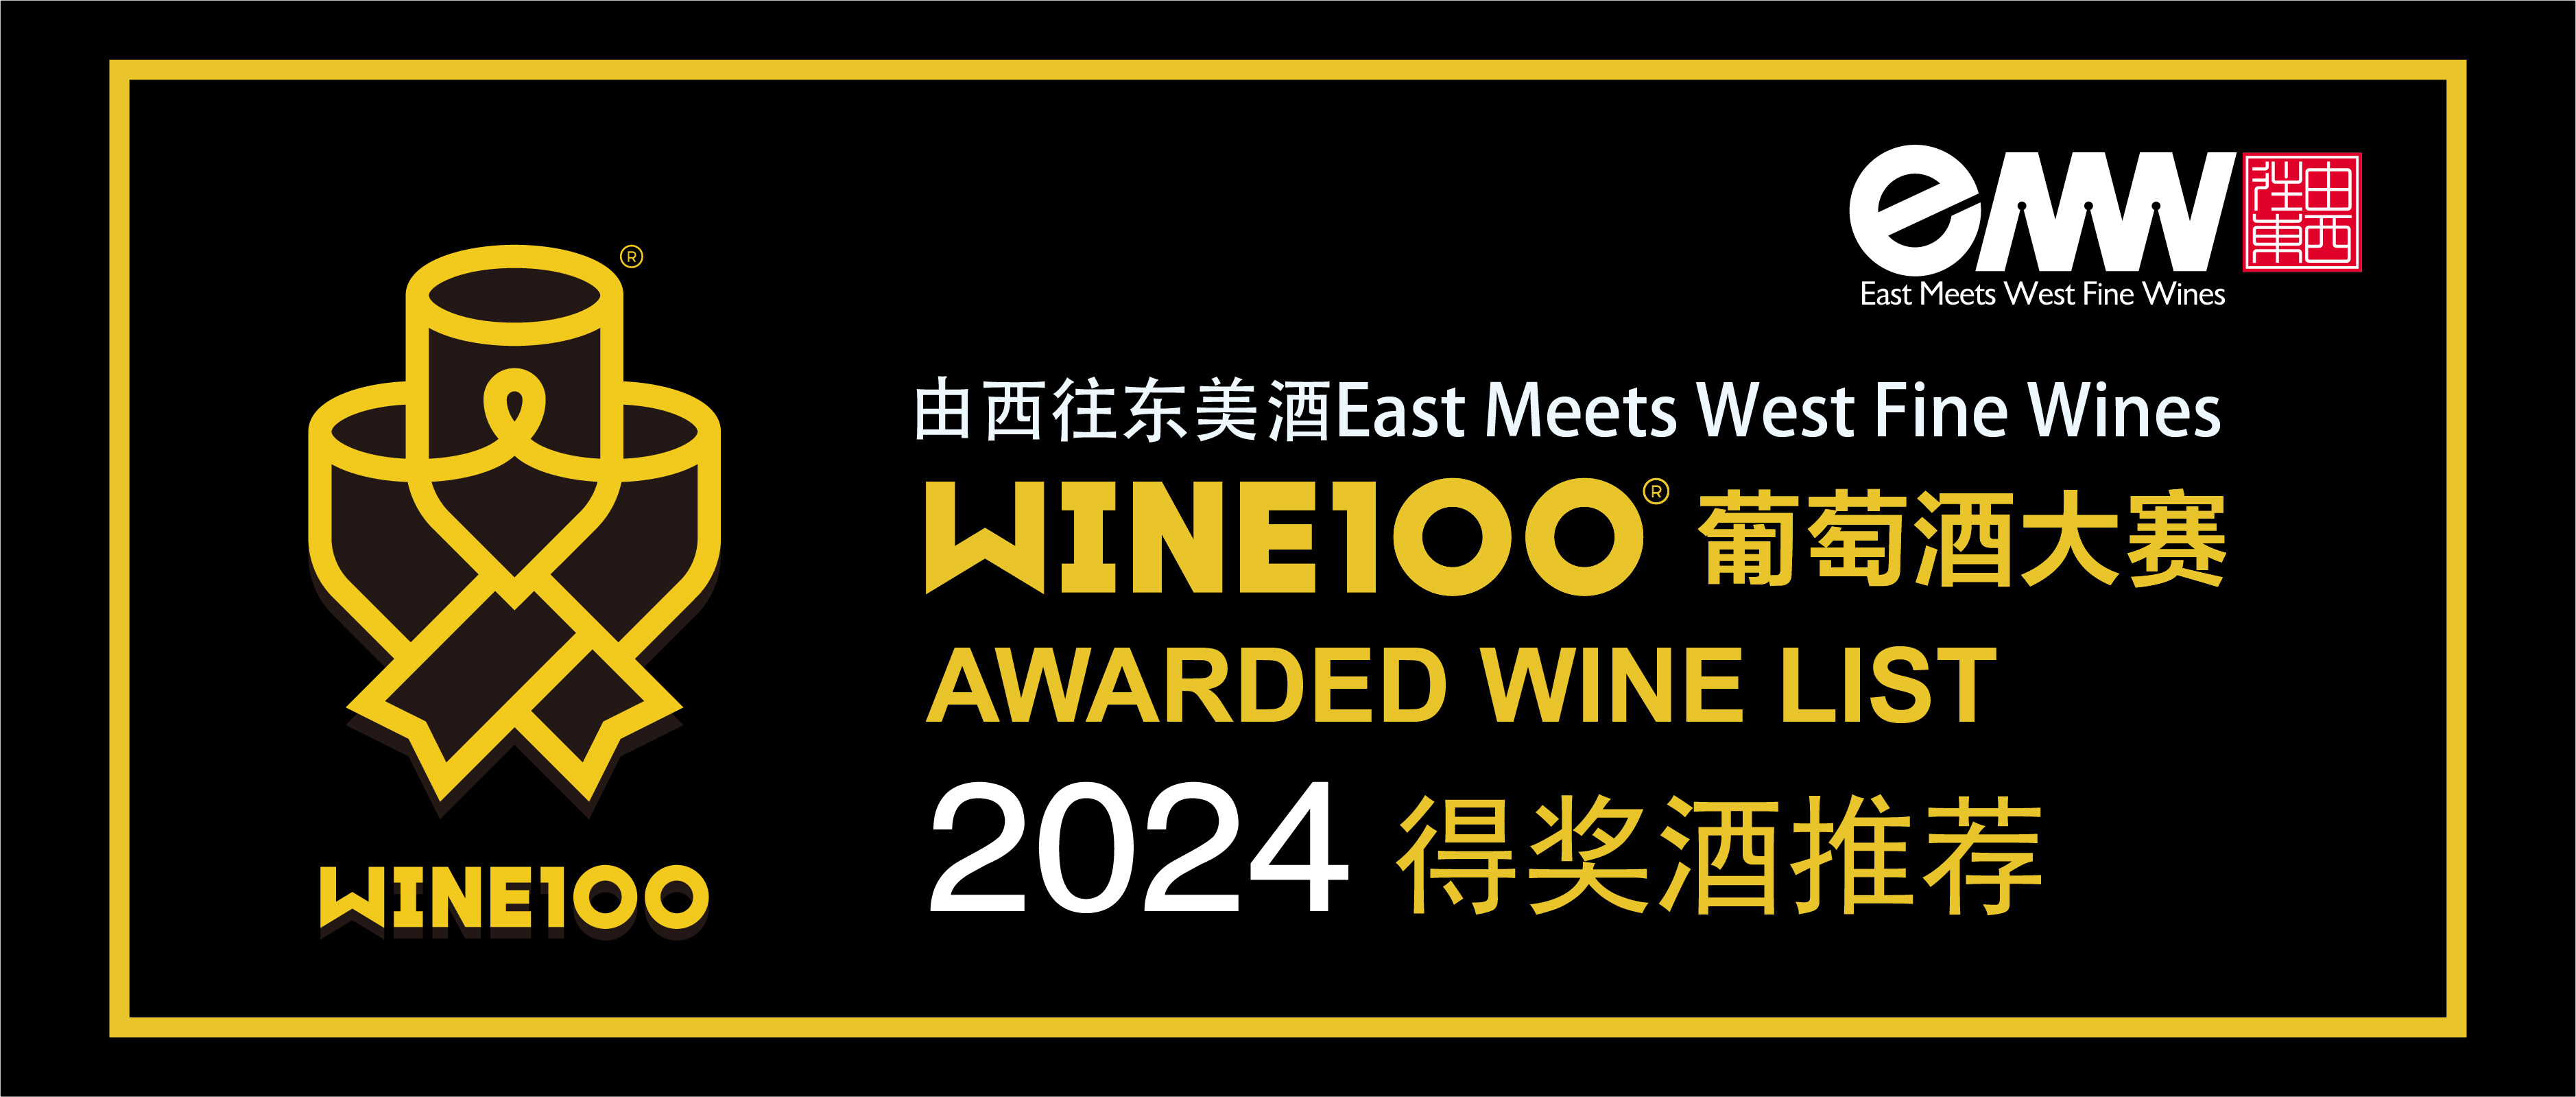 2024 WINE100 Challenge award list revealed